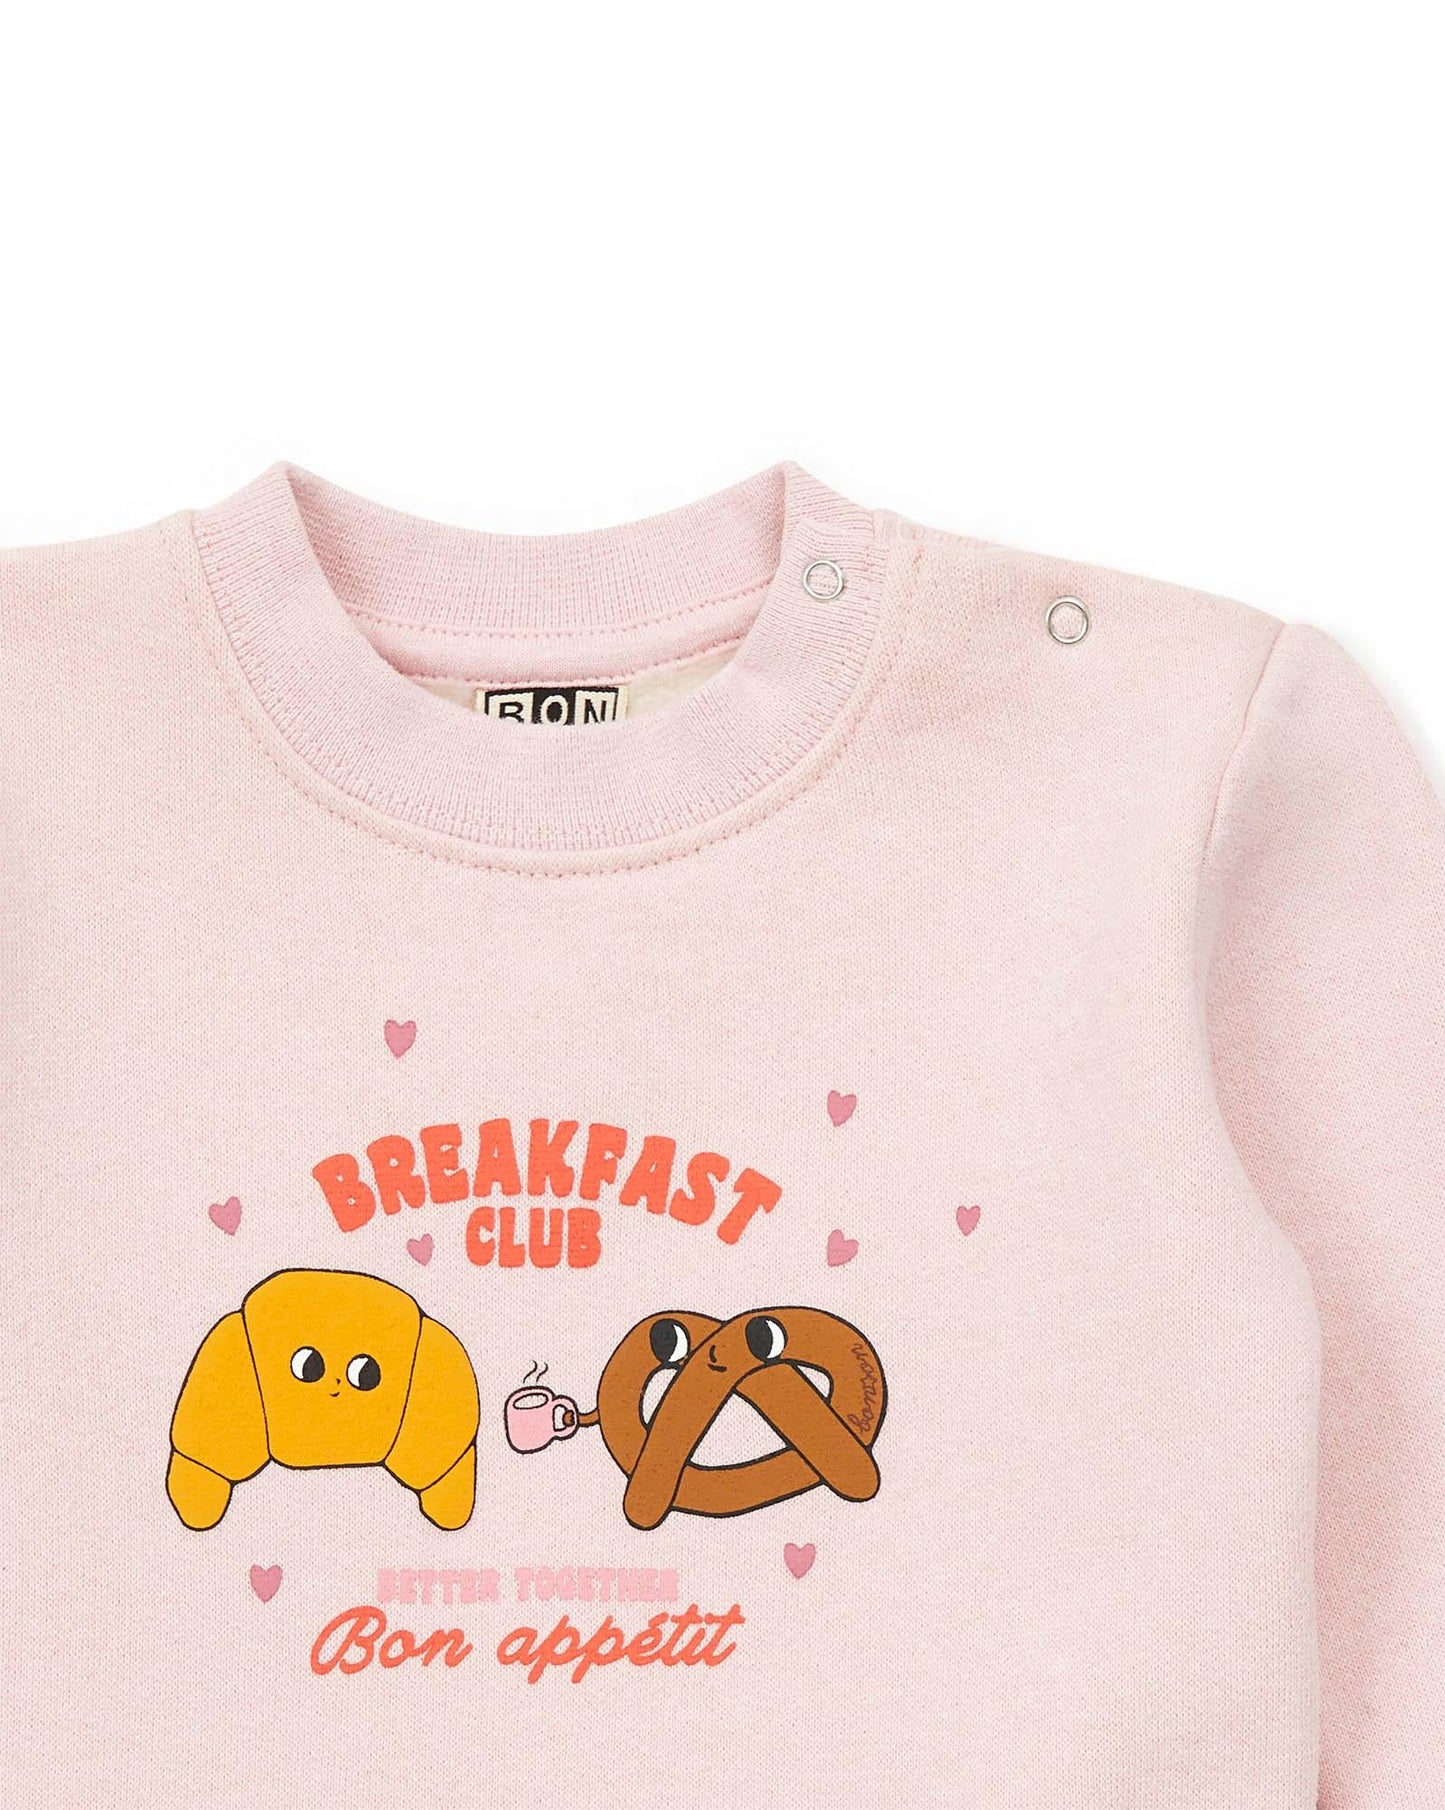 Sweatshirt - Breakfast Pink Baby in organic cotton